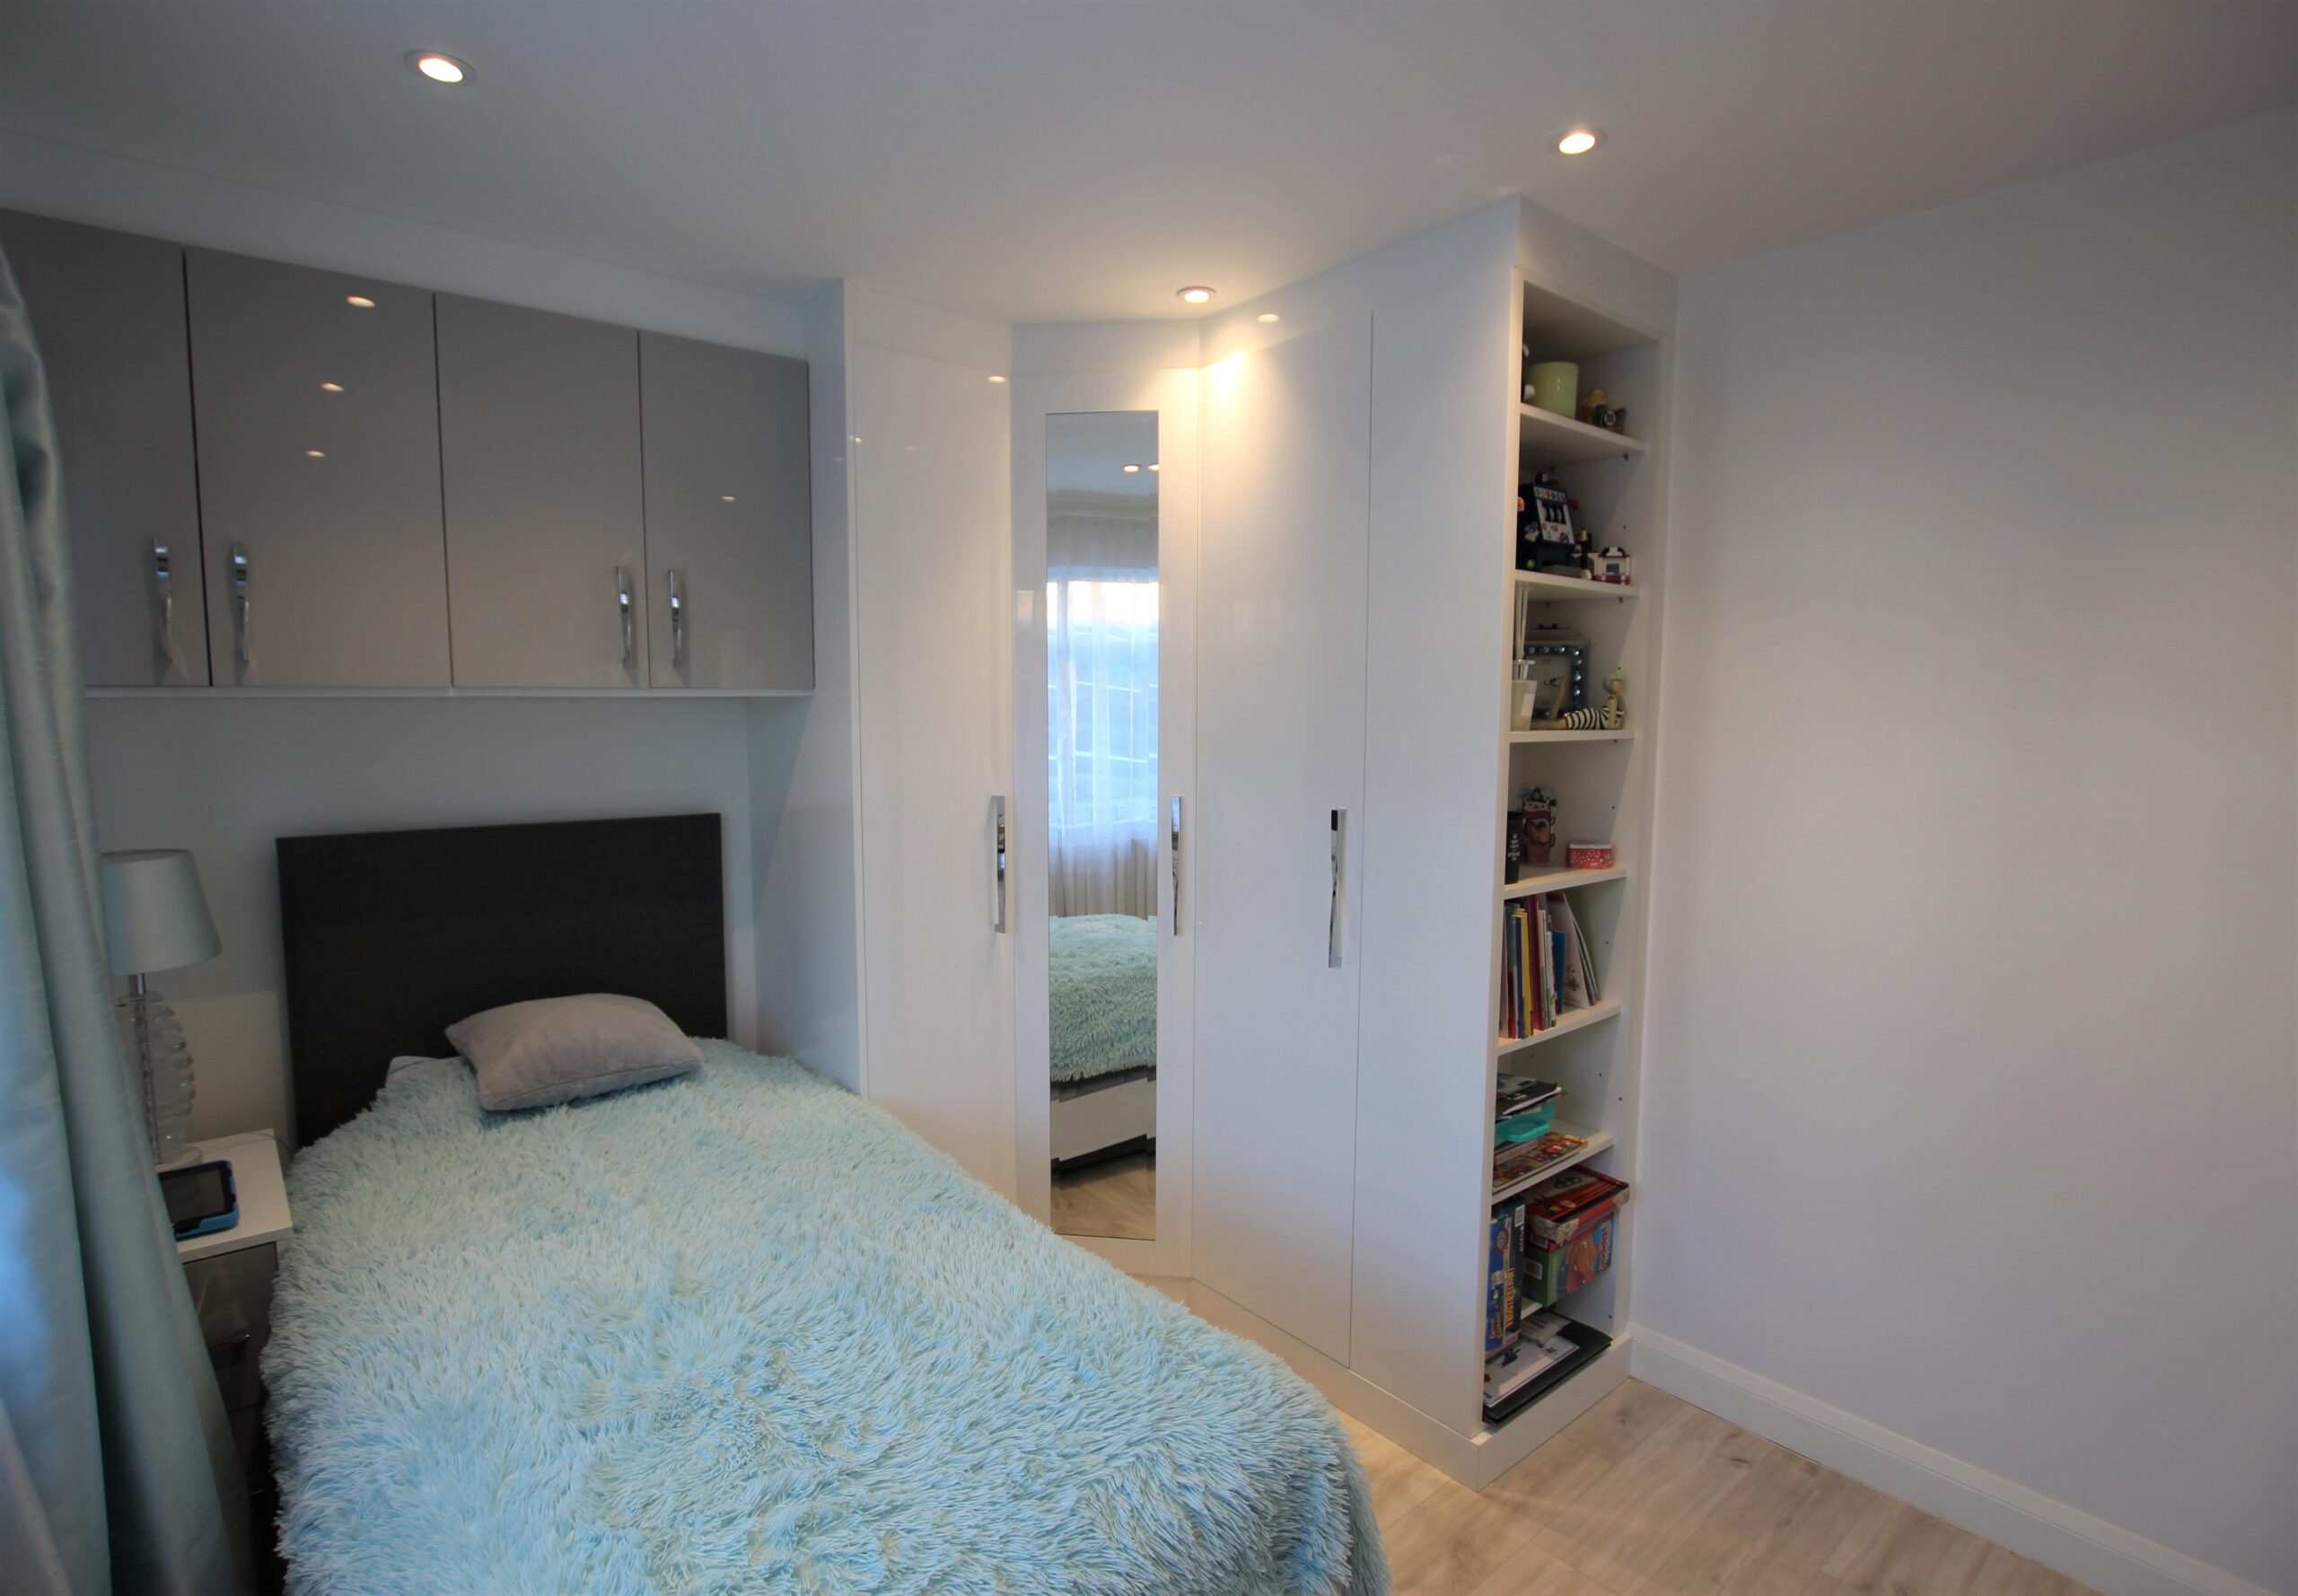 Bespoke bedroom designed, supplied and installed by Hampdens KB